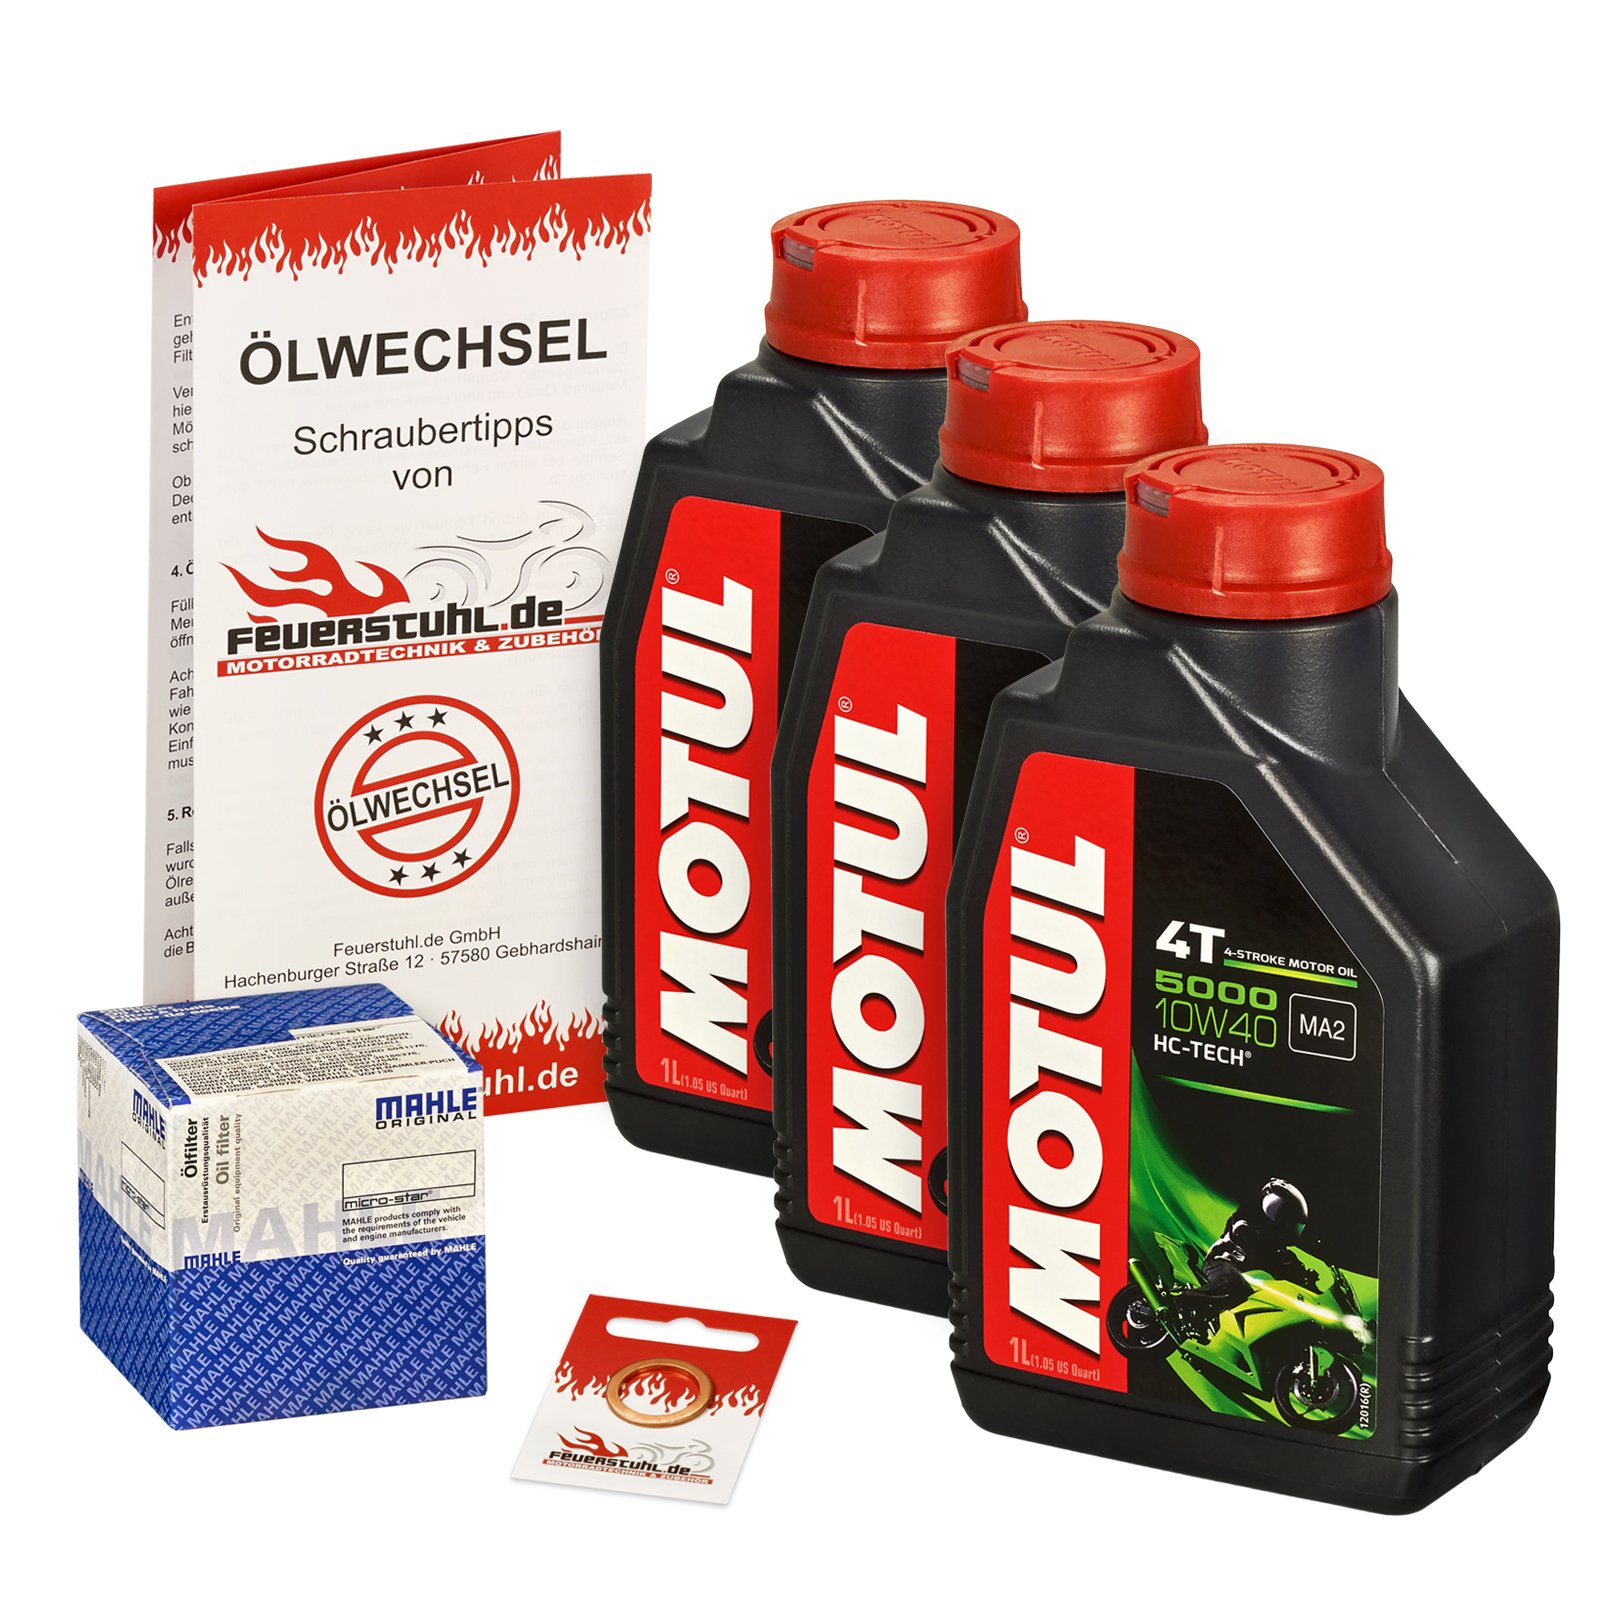 Motul 10W-40 Öl + Mahle Ölfilter für Suzuki VS 800 Intruder, 92-98, VS52B - Ölwechselset inkl. Motoröl, Filter, Dichtring von Feuerstuhl.de GmbH